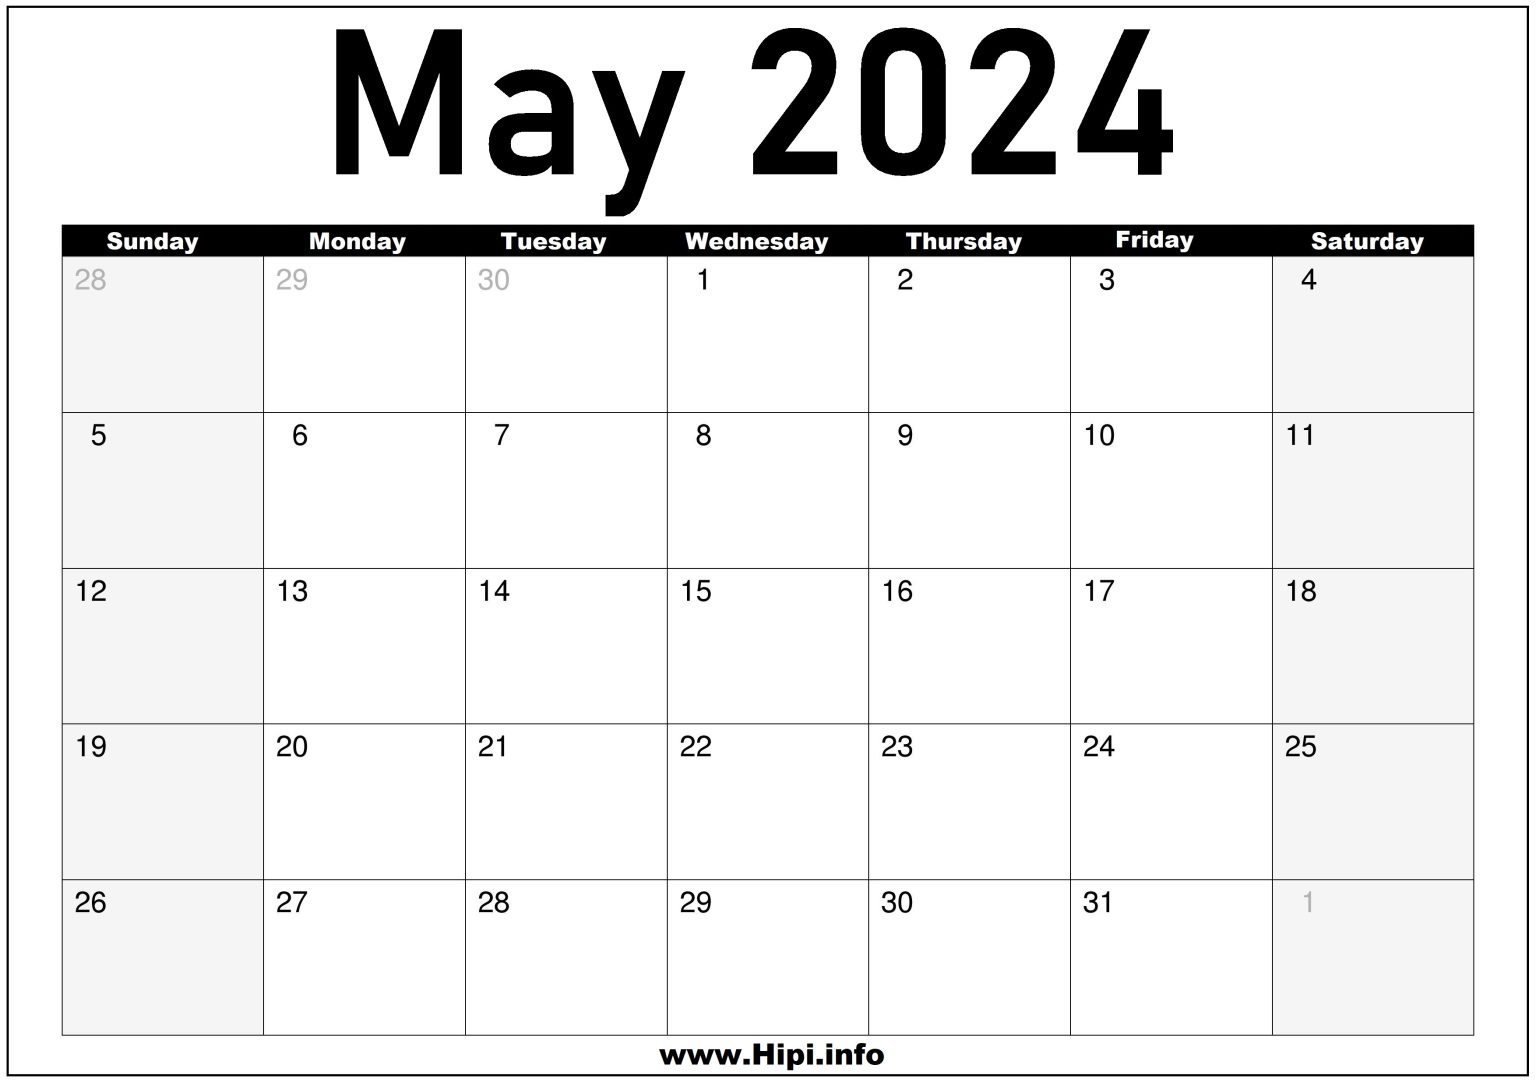 august-2023-calendar-printable